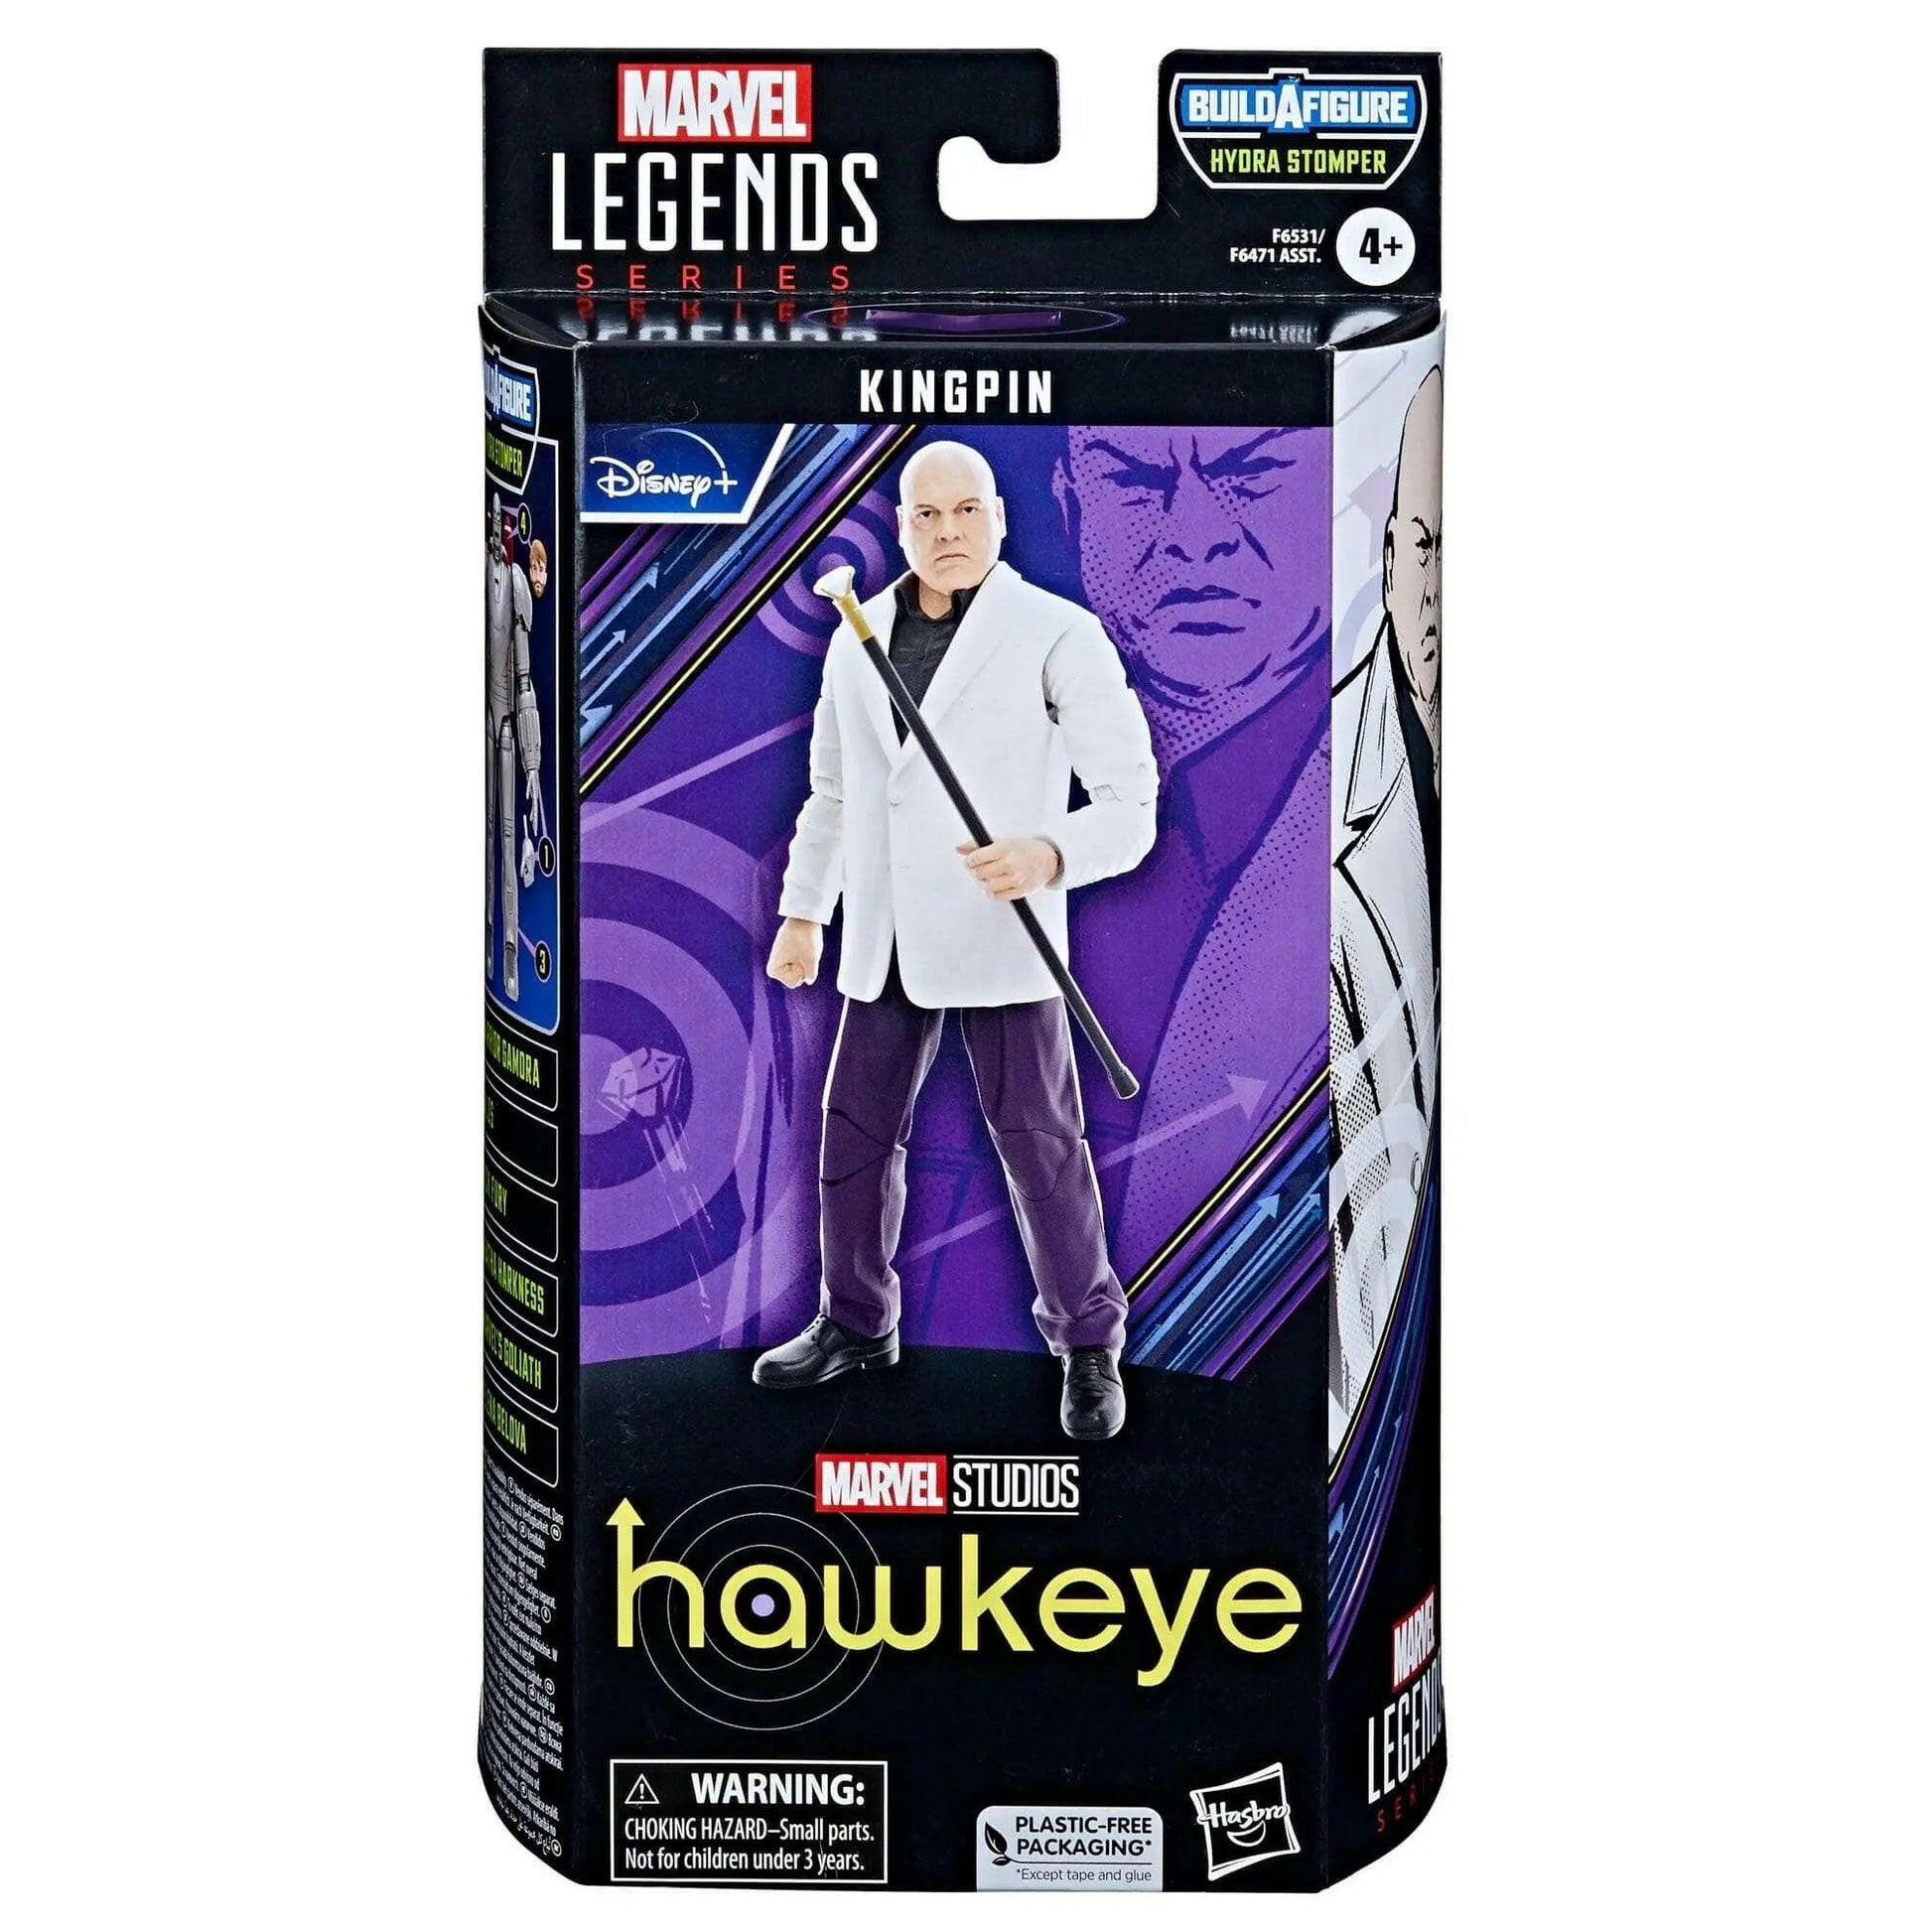 Marvel Legends Hawkeye Actionfigur Kingpin (BAF: Hydra Stomper) 15cm - Toy-Storage